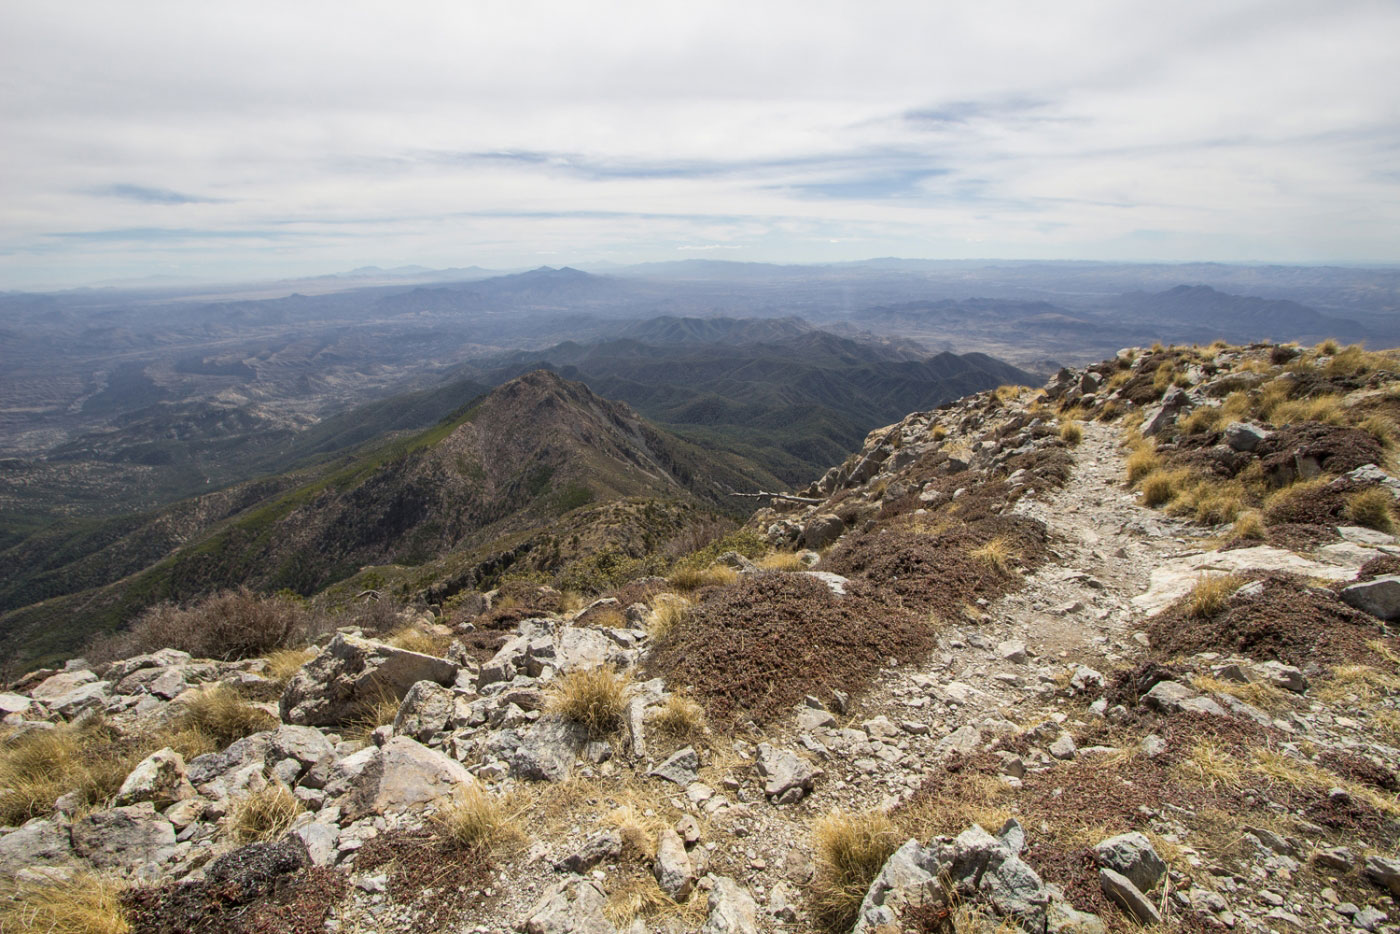 Hike Mount Wrightson via Old Baldy Trail in Coronado National Forest, Arizona - Stav is Lost